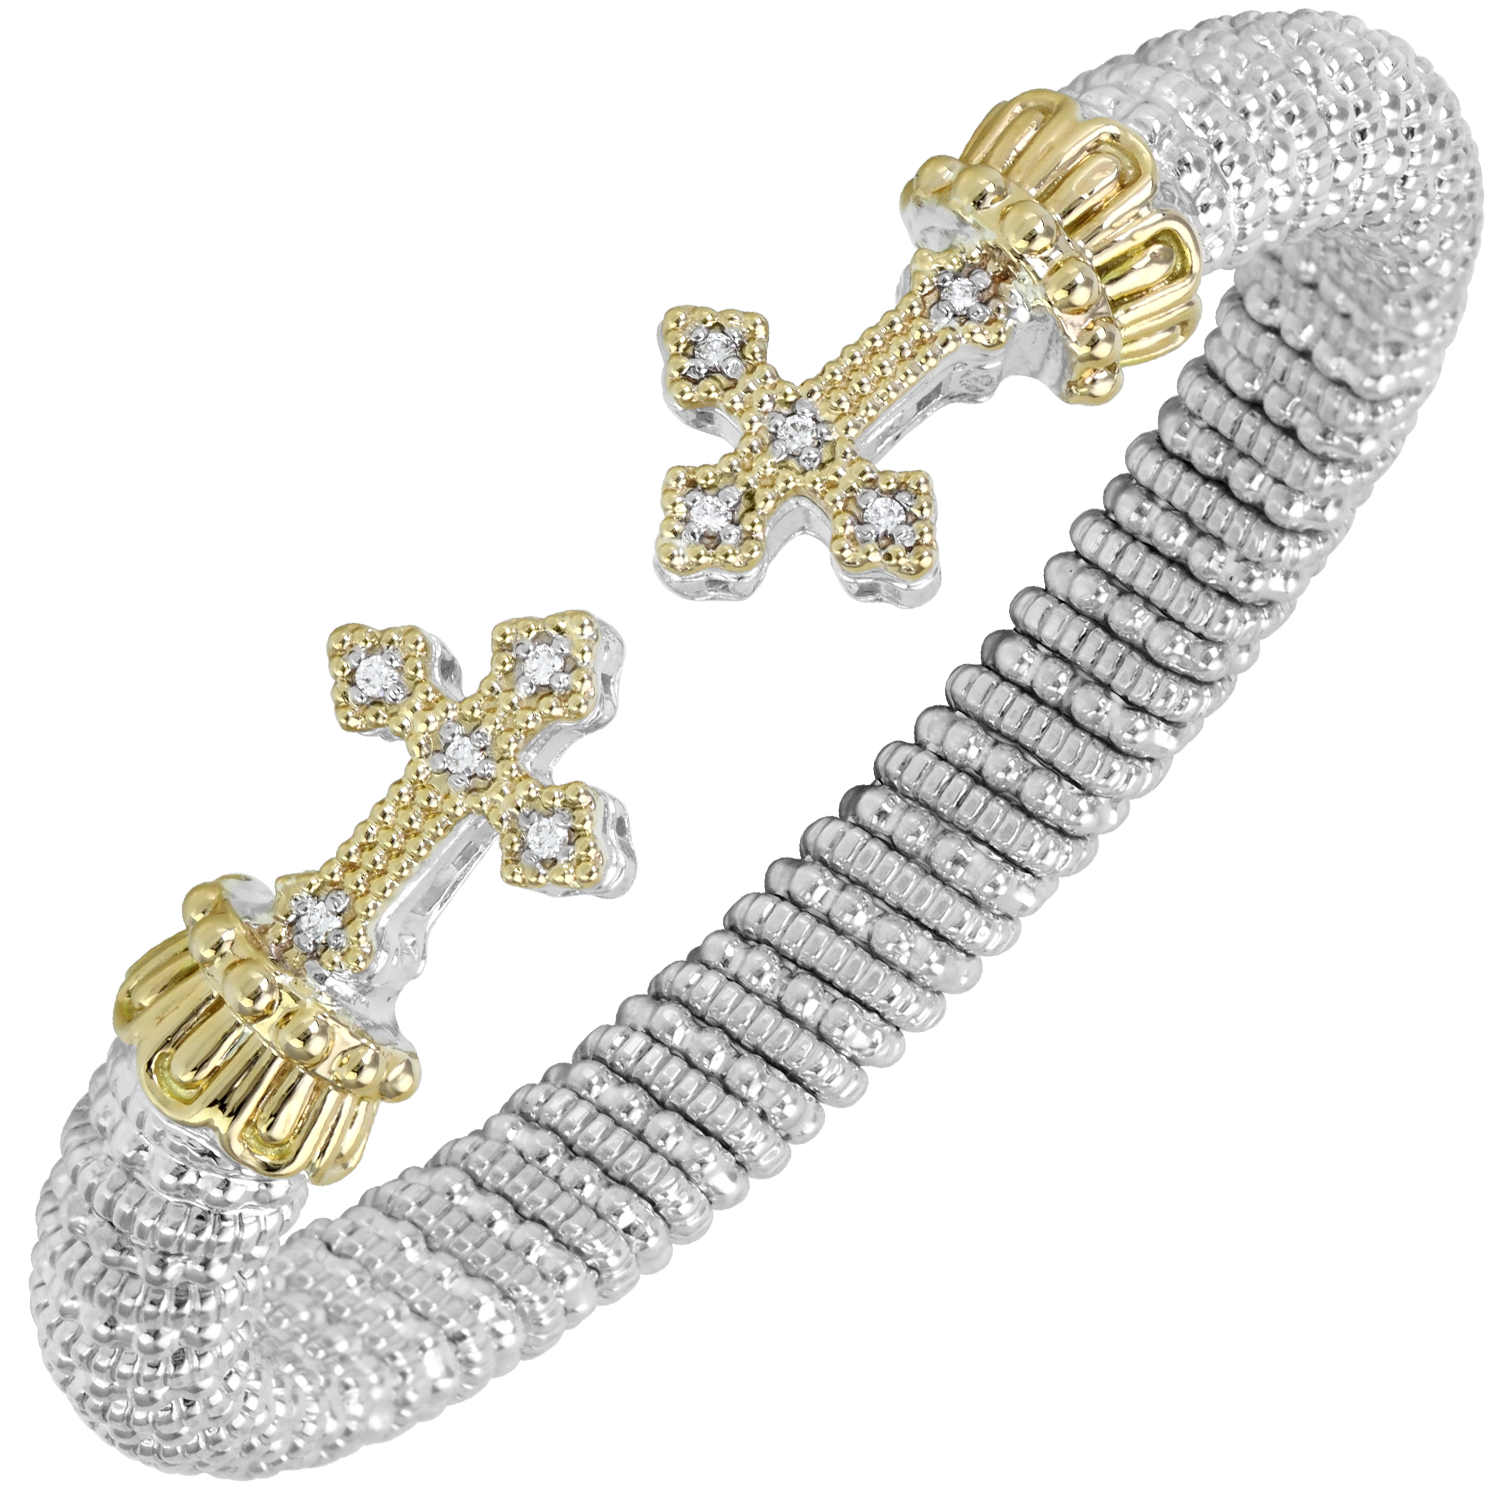 Life of Christ Charm Bracelet - Antons Fine Jewelry - Baton Rouge